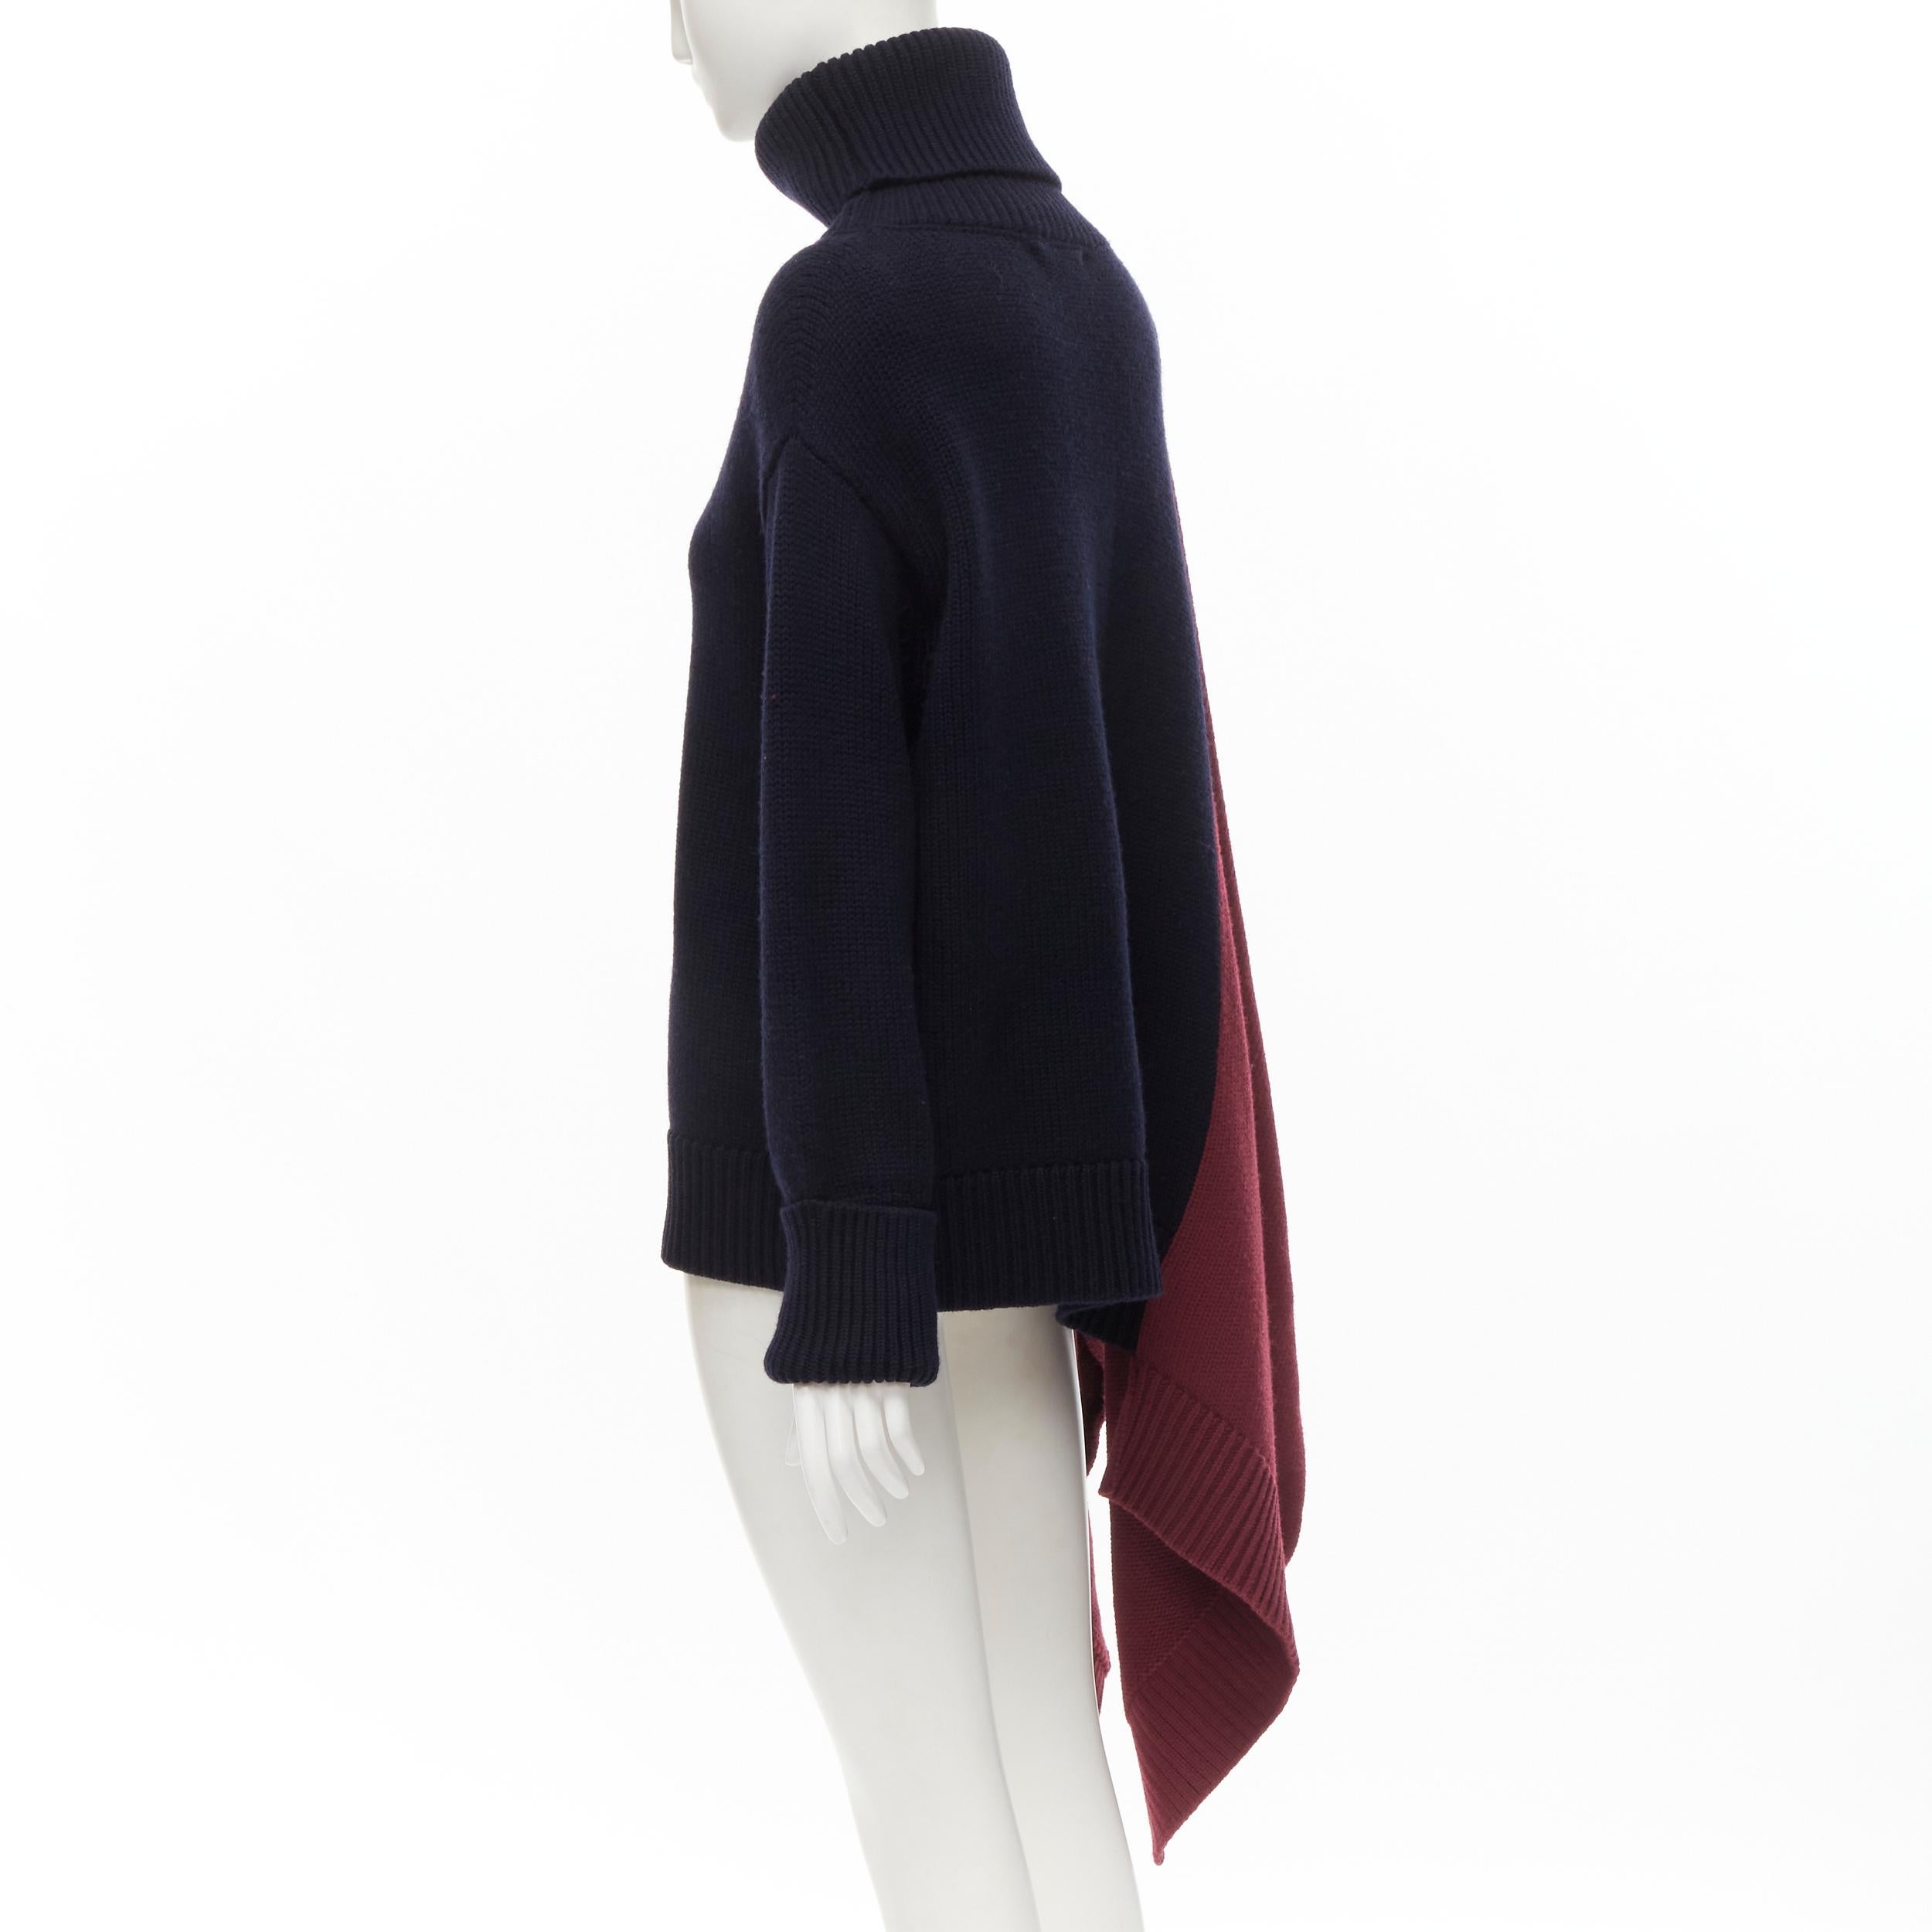 Women's new MONSE 100% extra fine merino wool navy burgundy bias sweater cape pocho XS